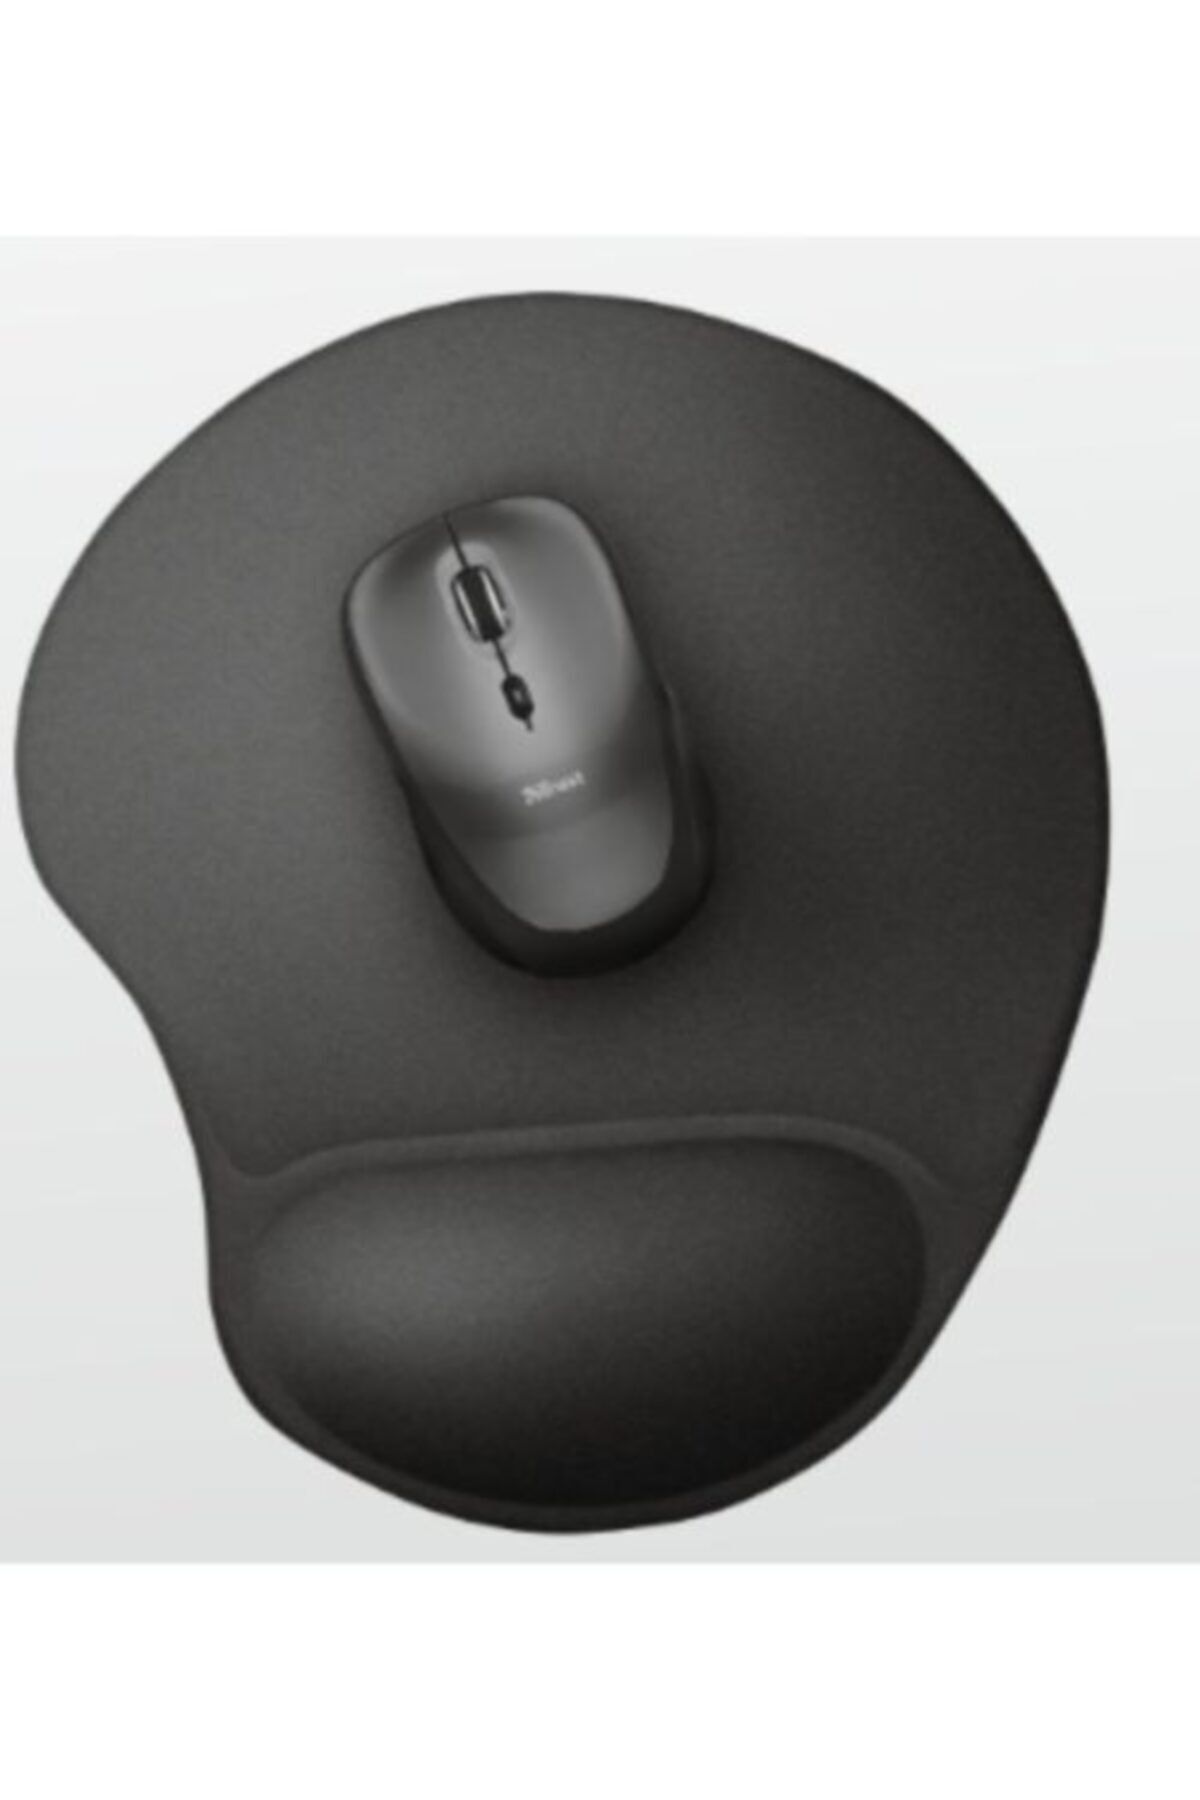 Ankaflex Bilek Destekli Jelli Mouseped Bilgisayar Mouse Ped Siyah Mousepad Mause Fare Altlığı